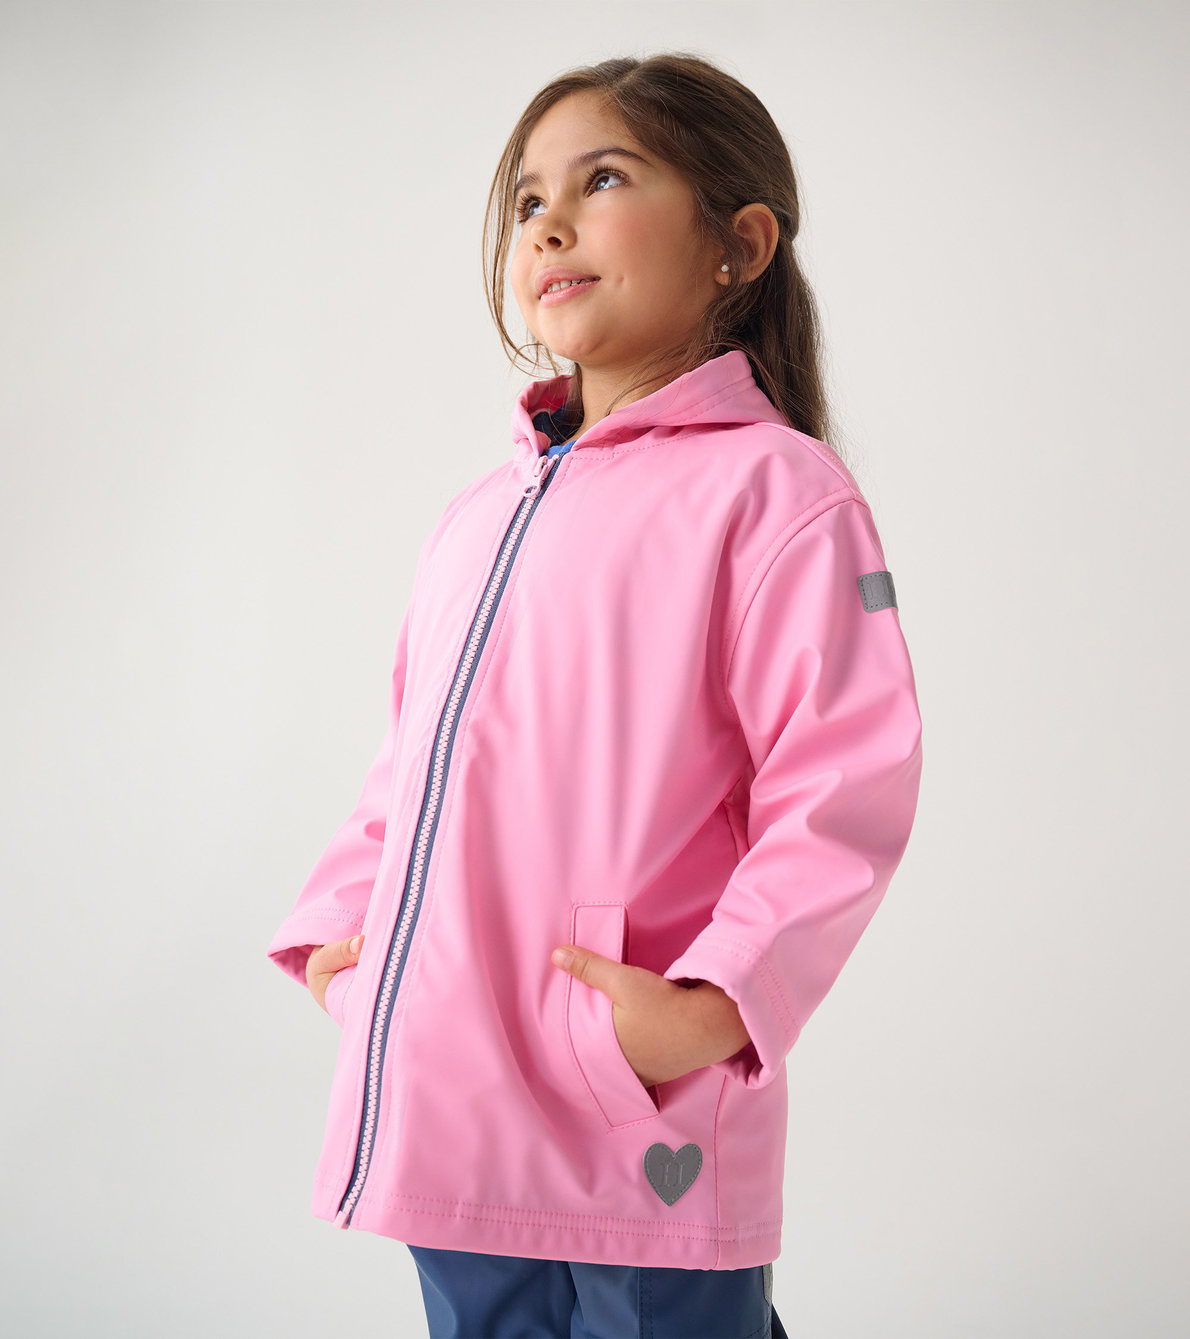 View larger image of Pink with Navy Splash Kit